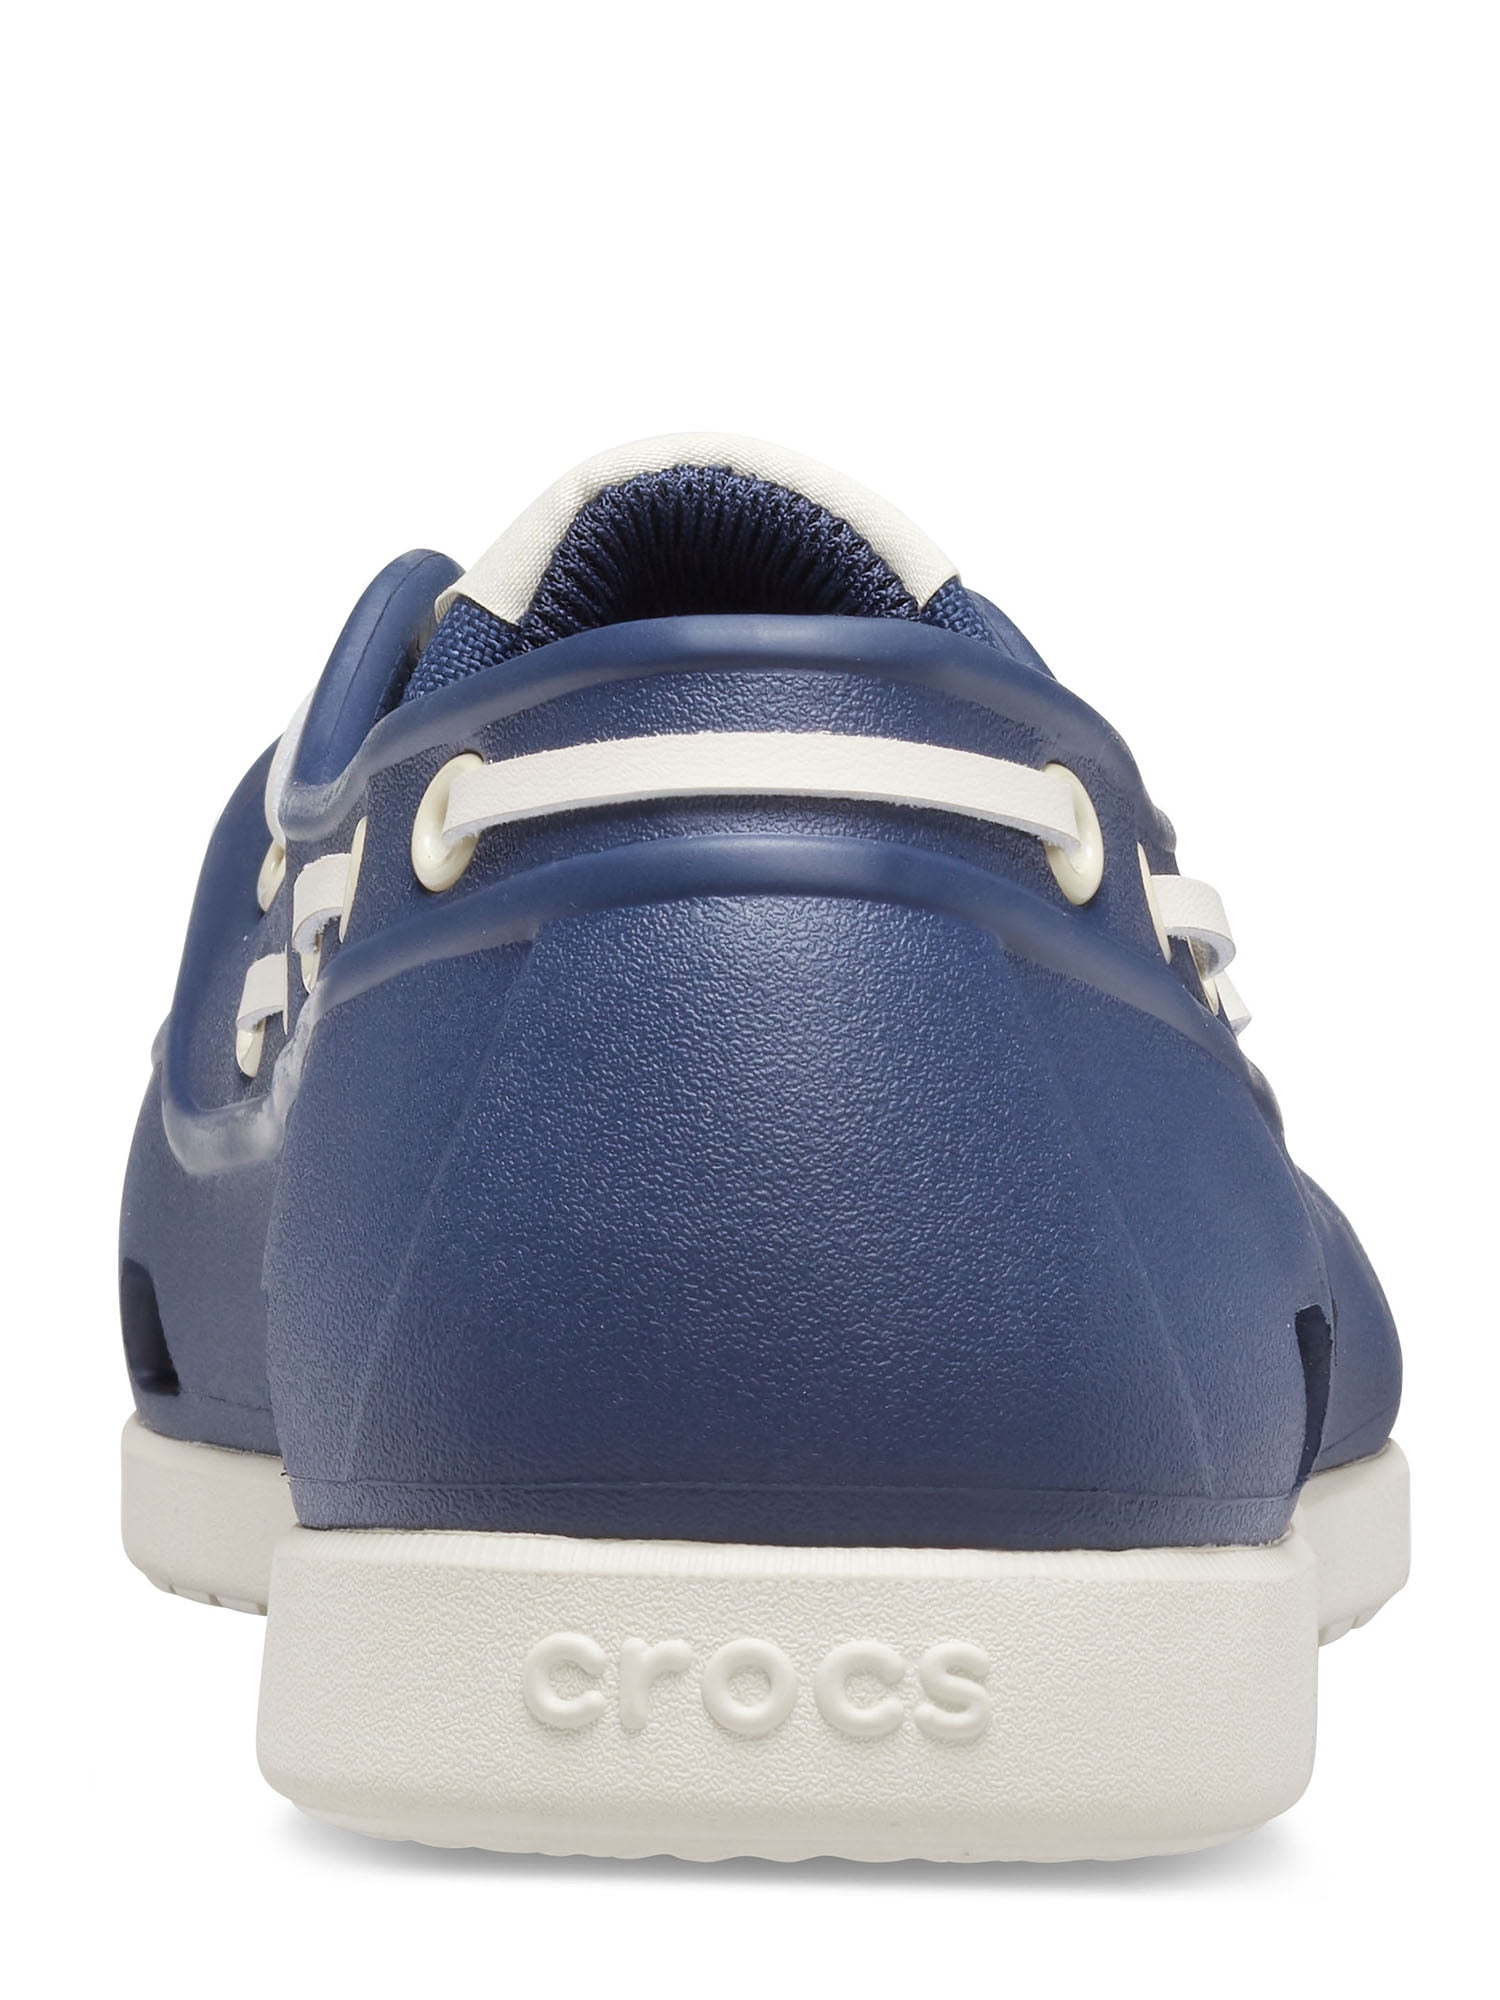 crocs sailing shoes